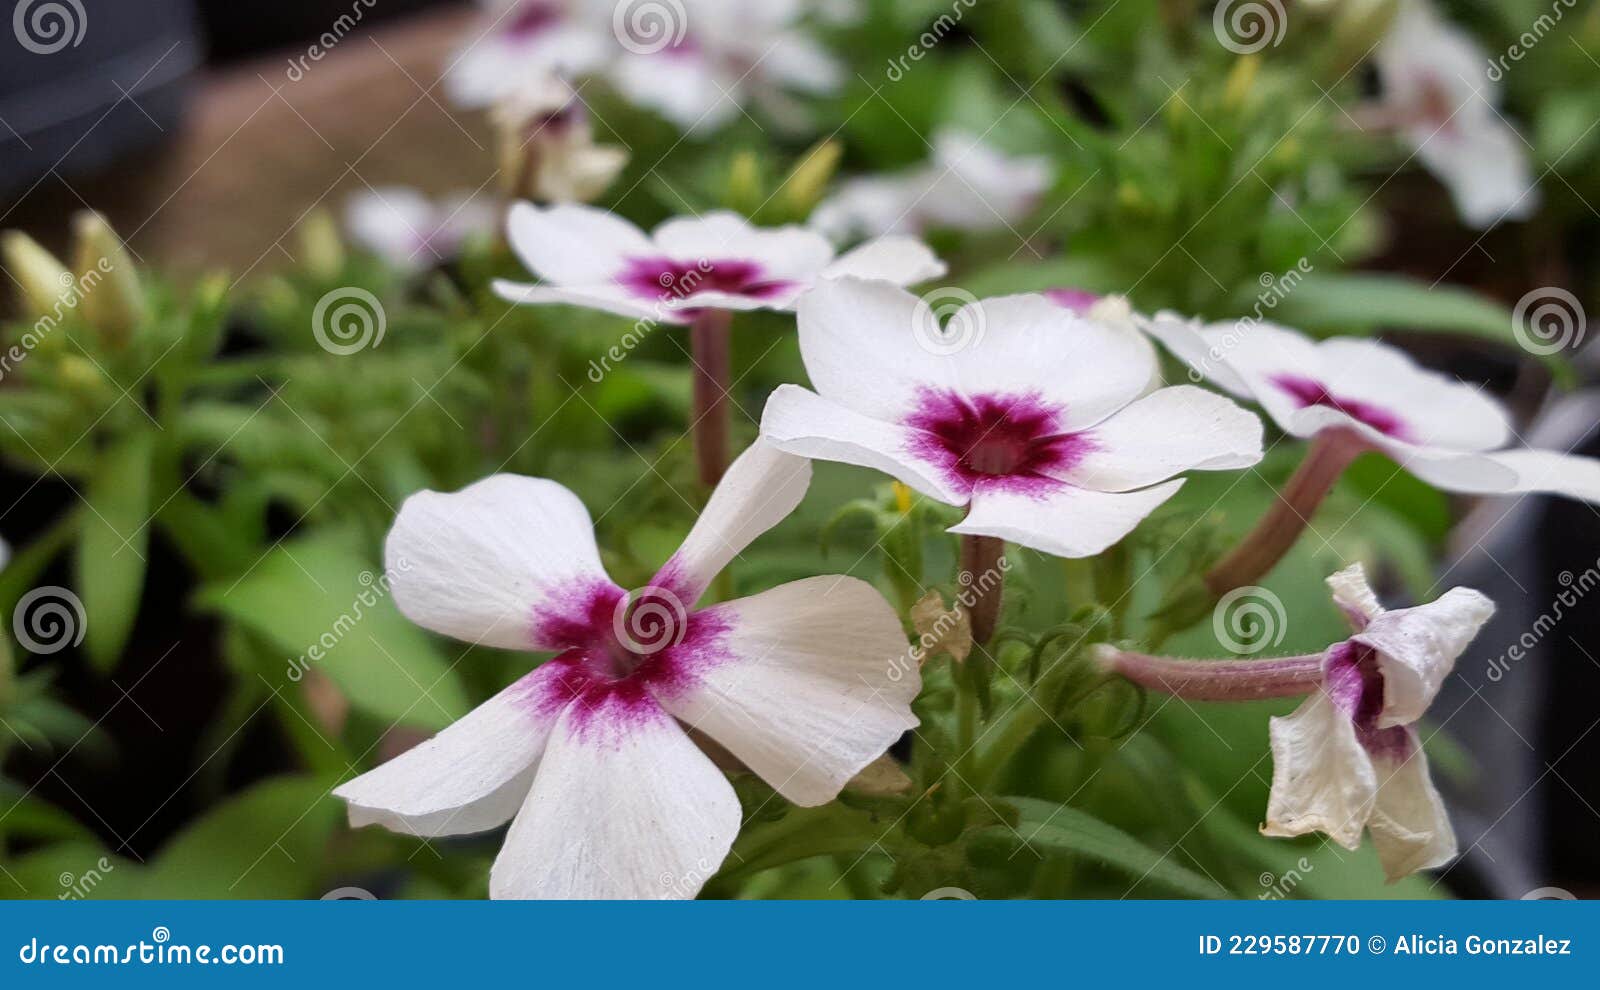 petunia close up flower white a purple center 2021